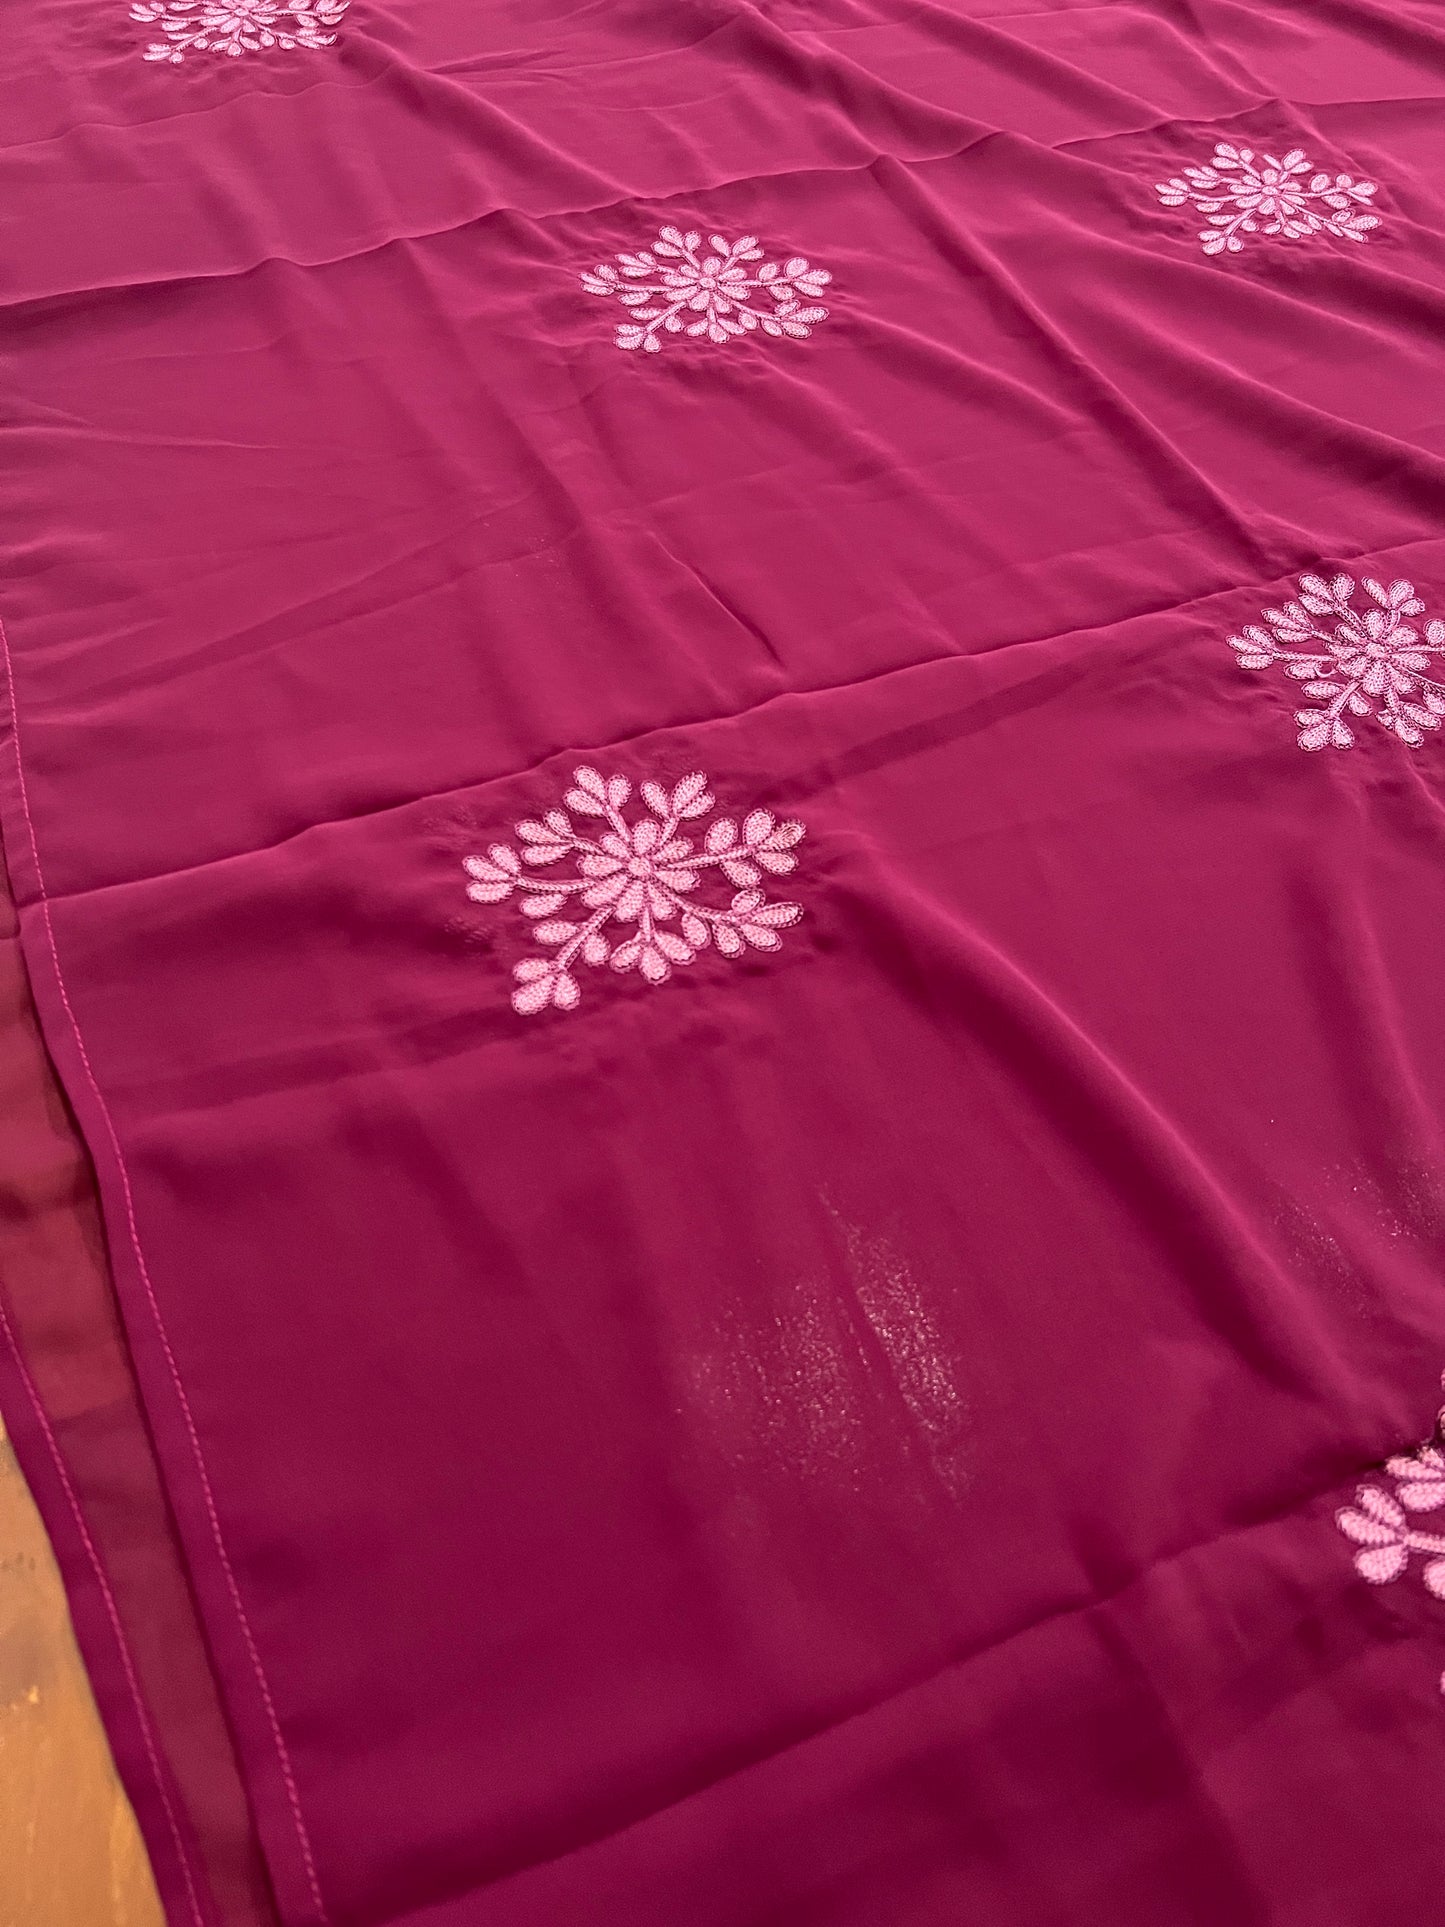 Southloom™ Georgette Churidar Salwar Suit Material in Maroon with Floral Thread work Design